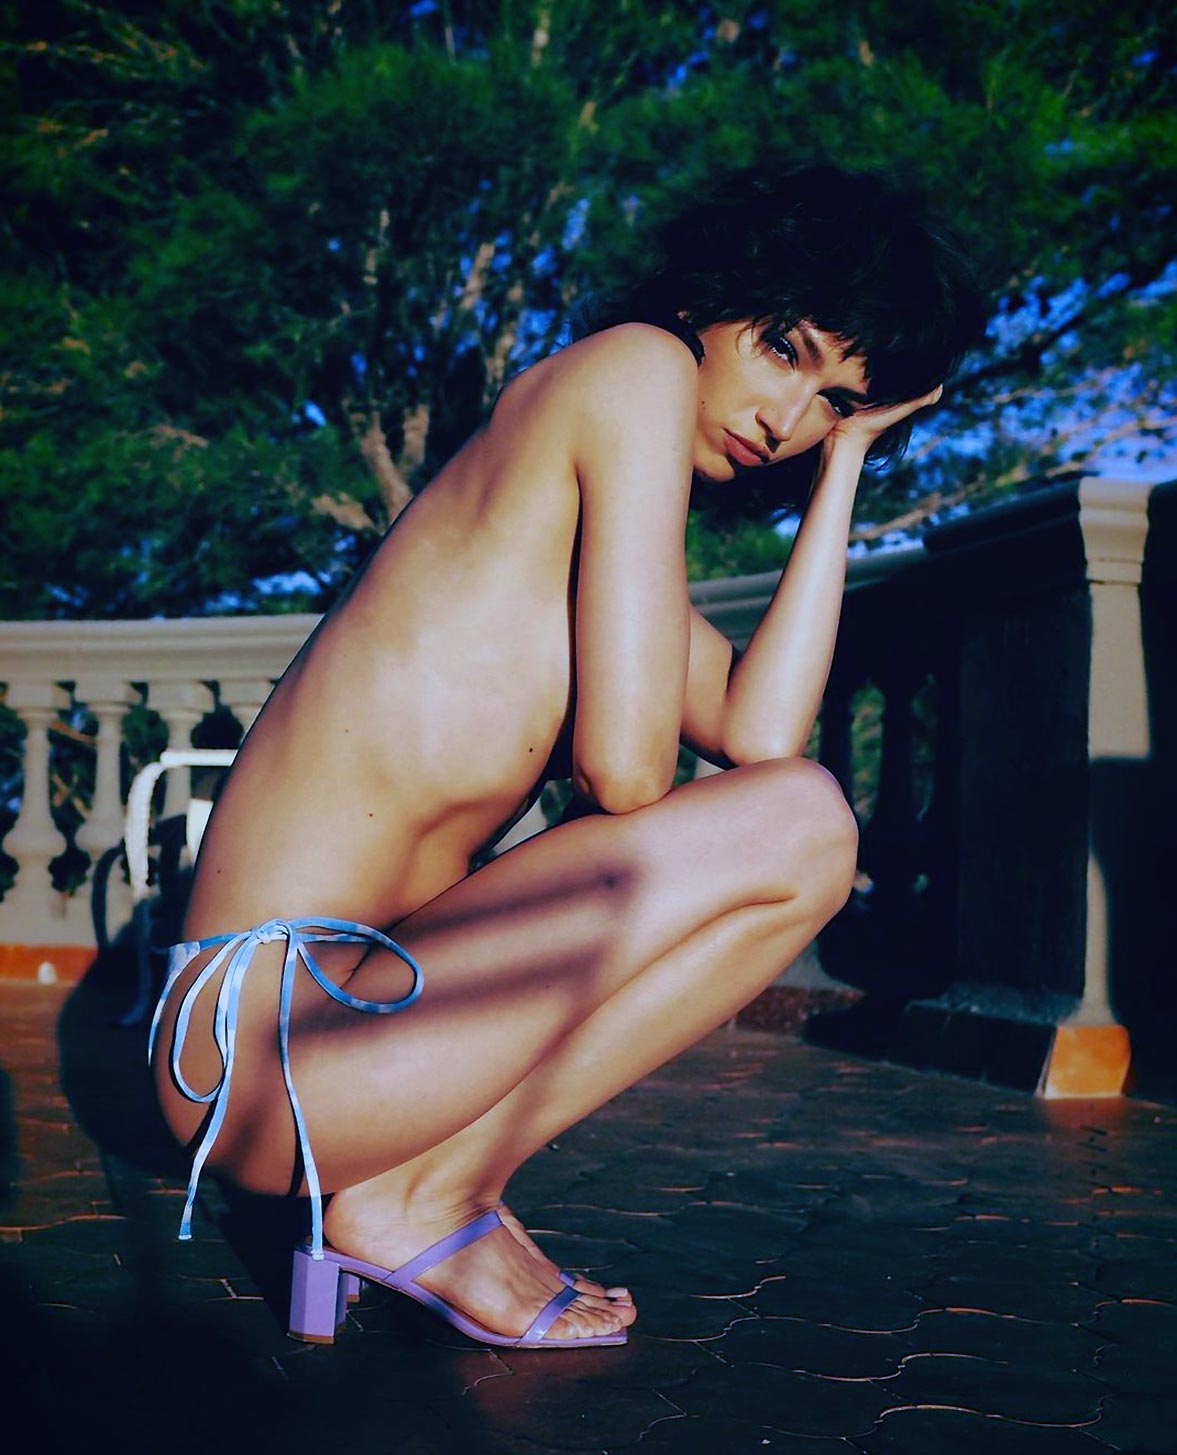 Ursula Corbero Nude and Topless Photos Collection.